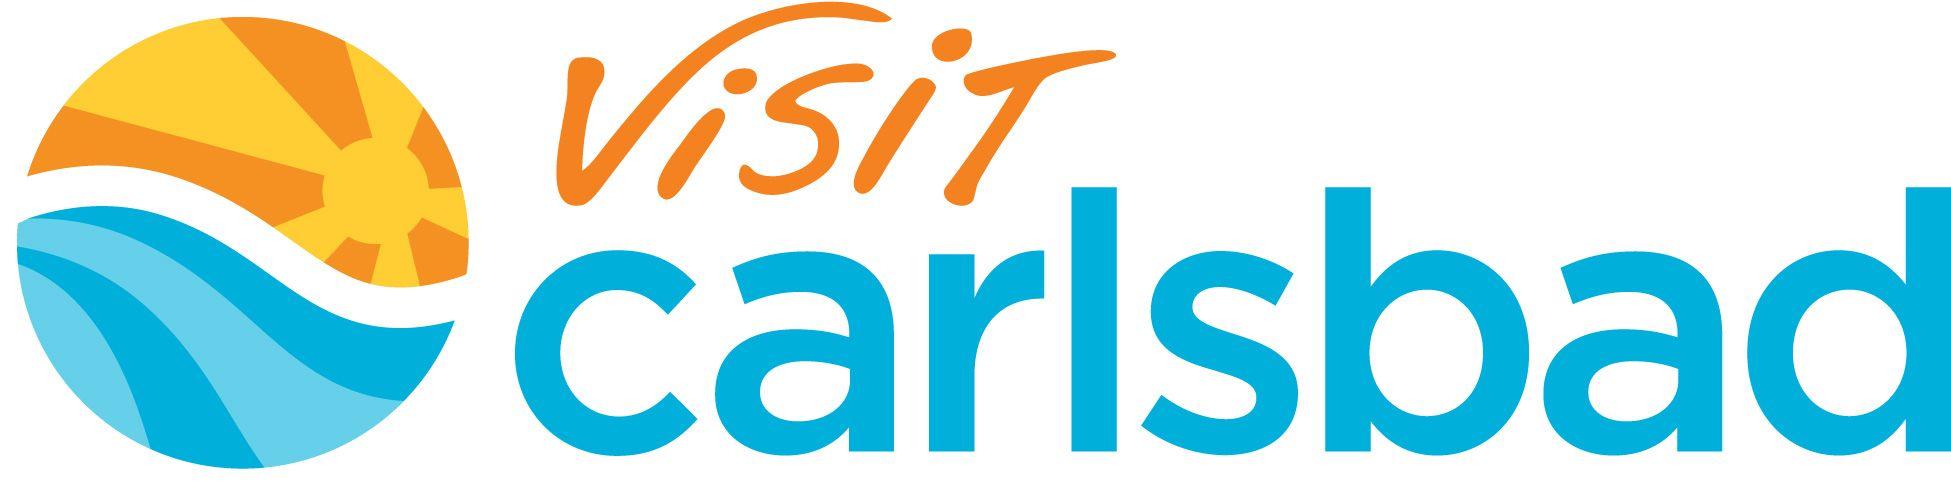 Carlsbad Logo - Tri City Medical Center Carlsbad Full And Half Marathon, Double Down